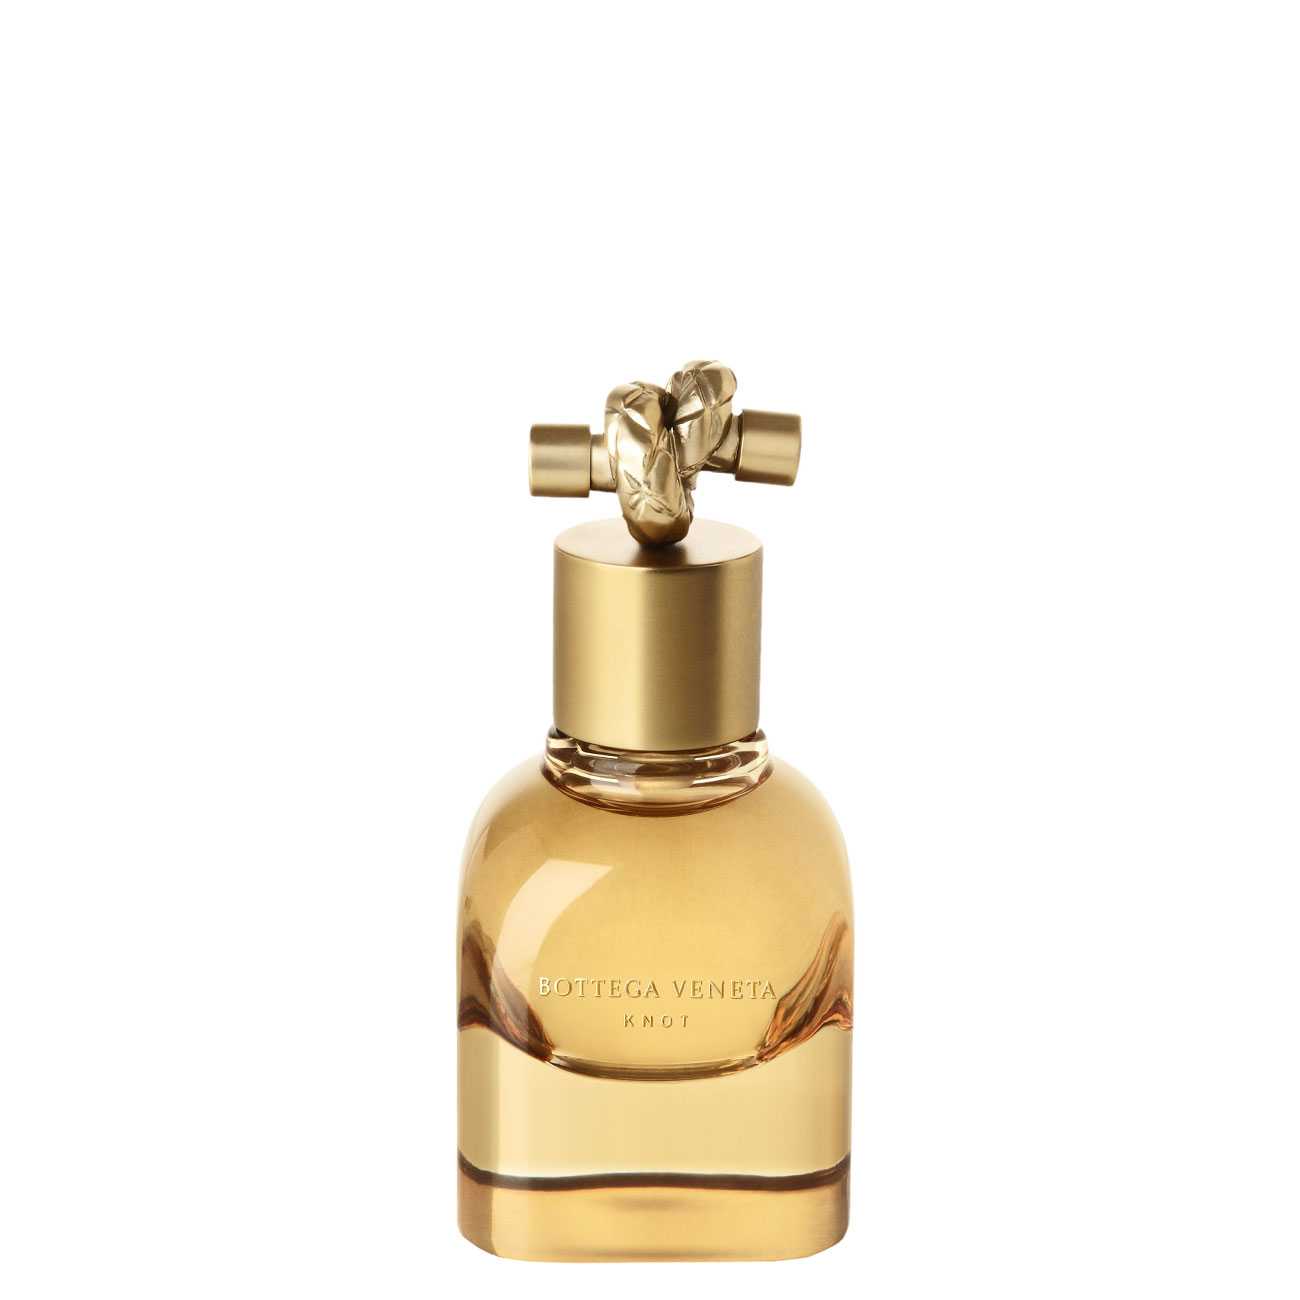 Apa de Parfum Bottega Veneta KNOT 50ml cu comanda online